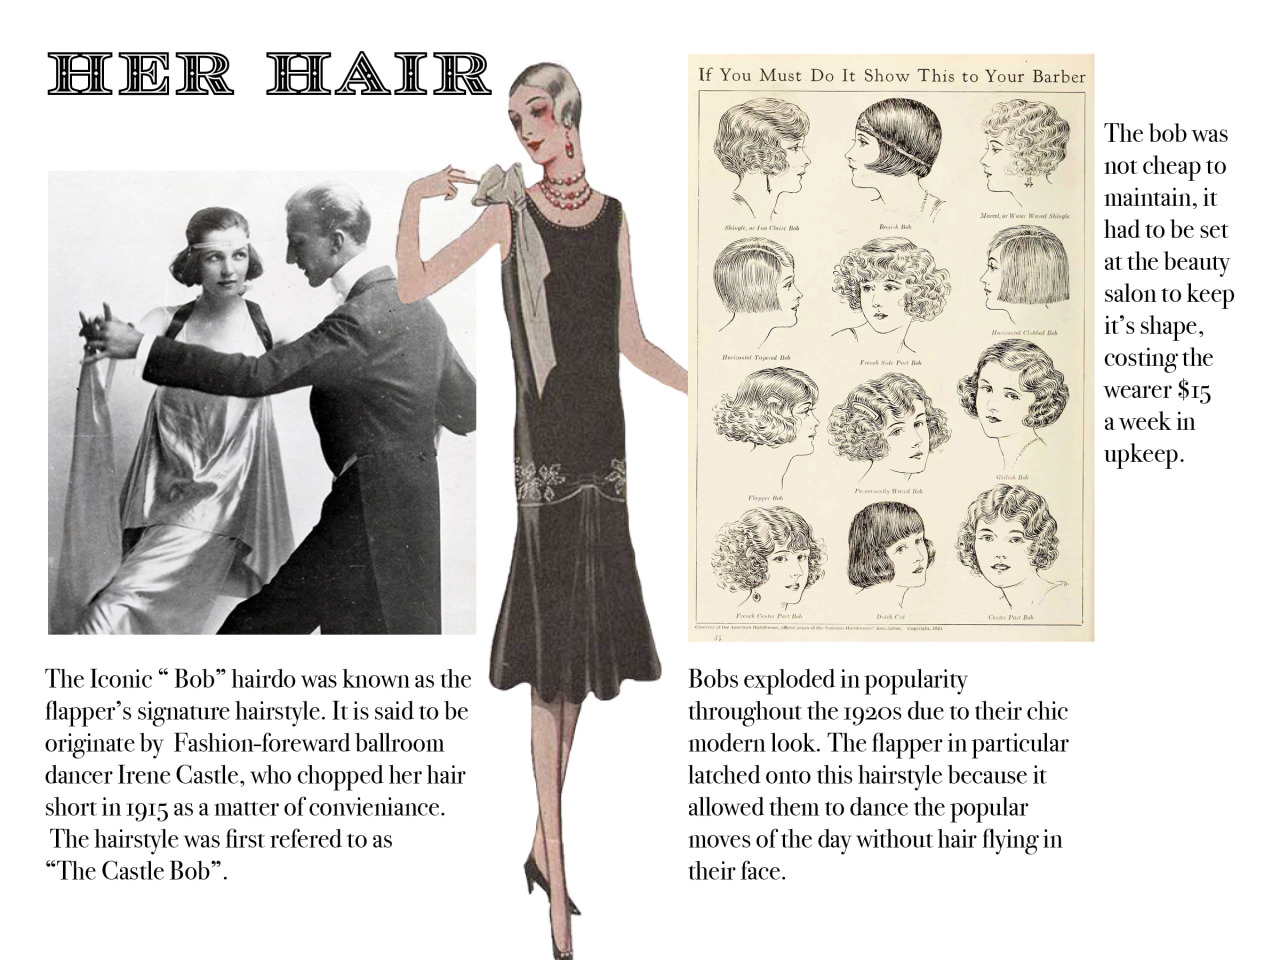 HIDESIGN - #StorytellingSaturdays The Flapper girl inspired us to